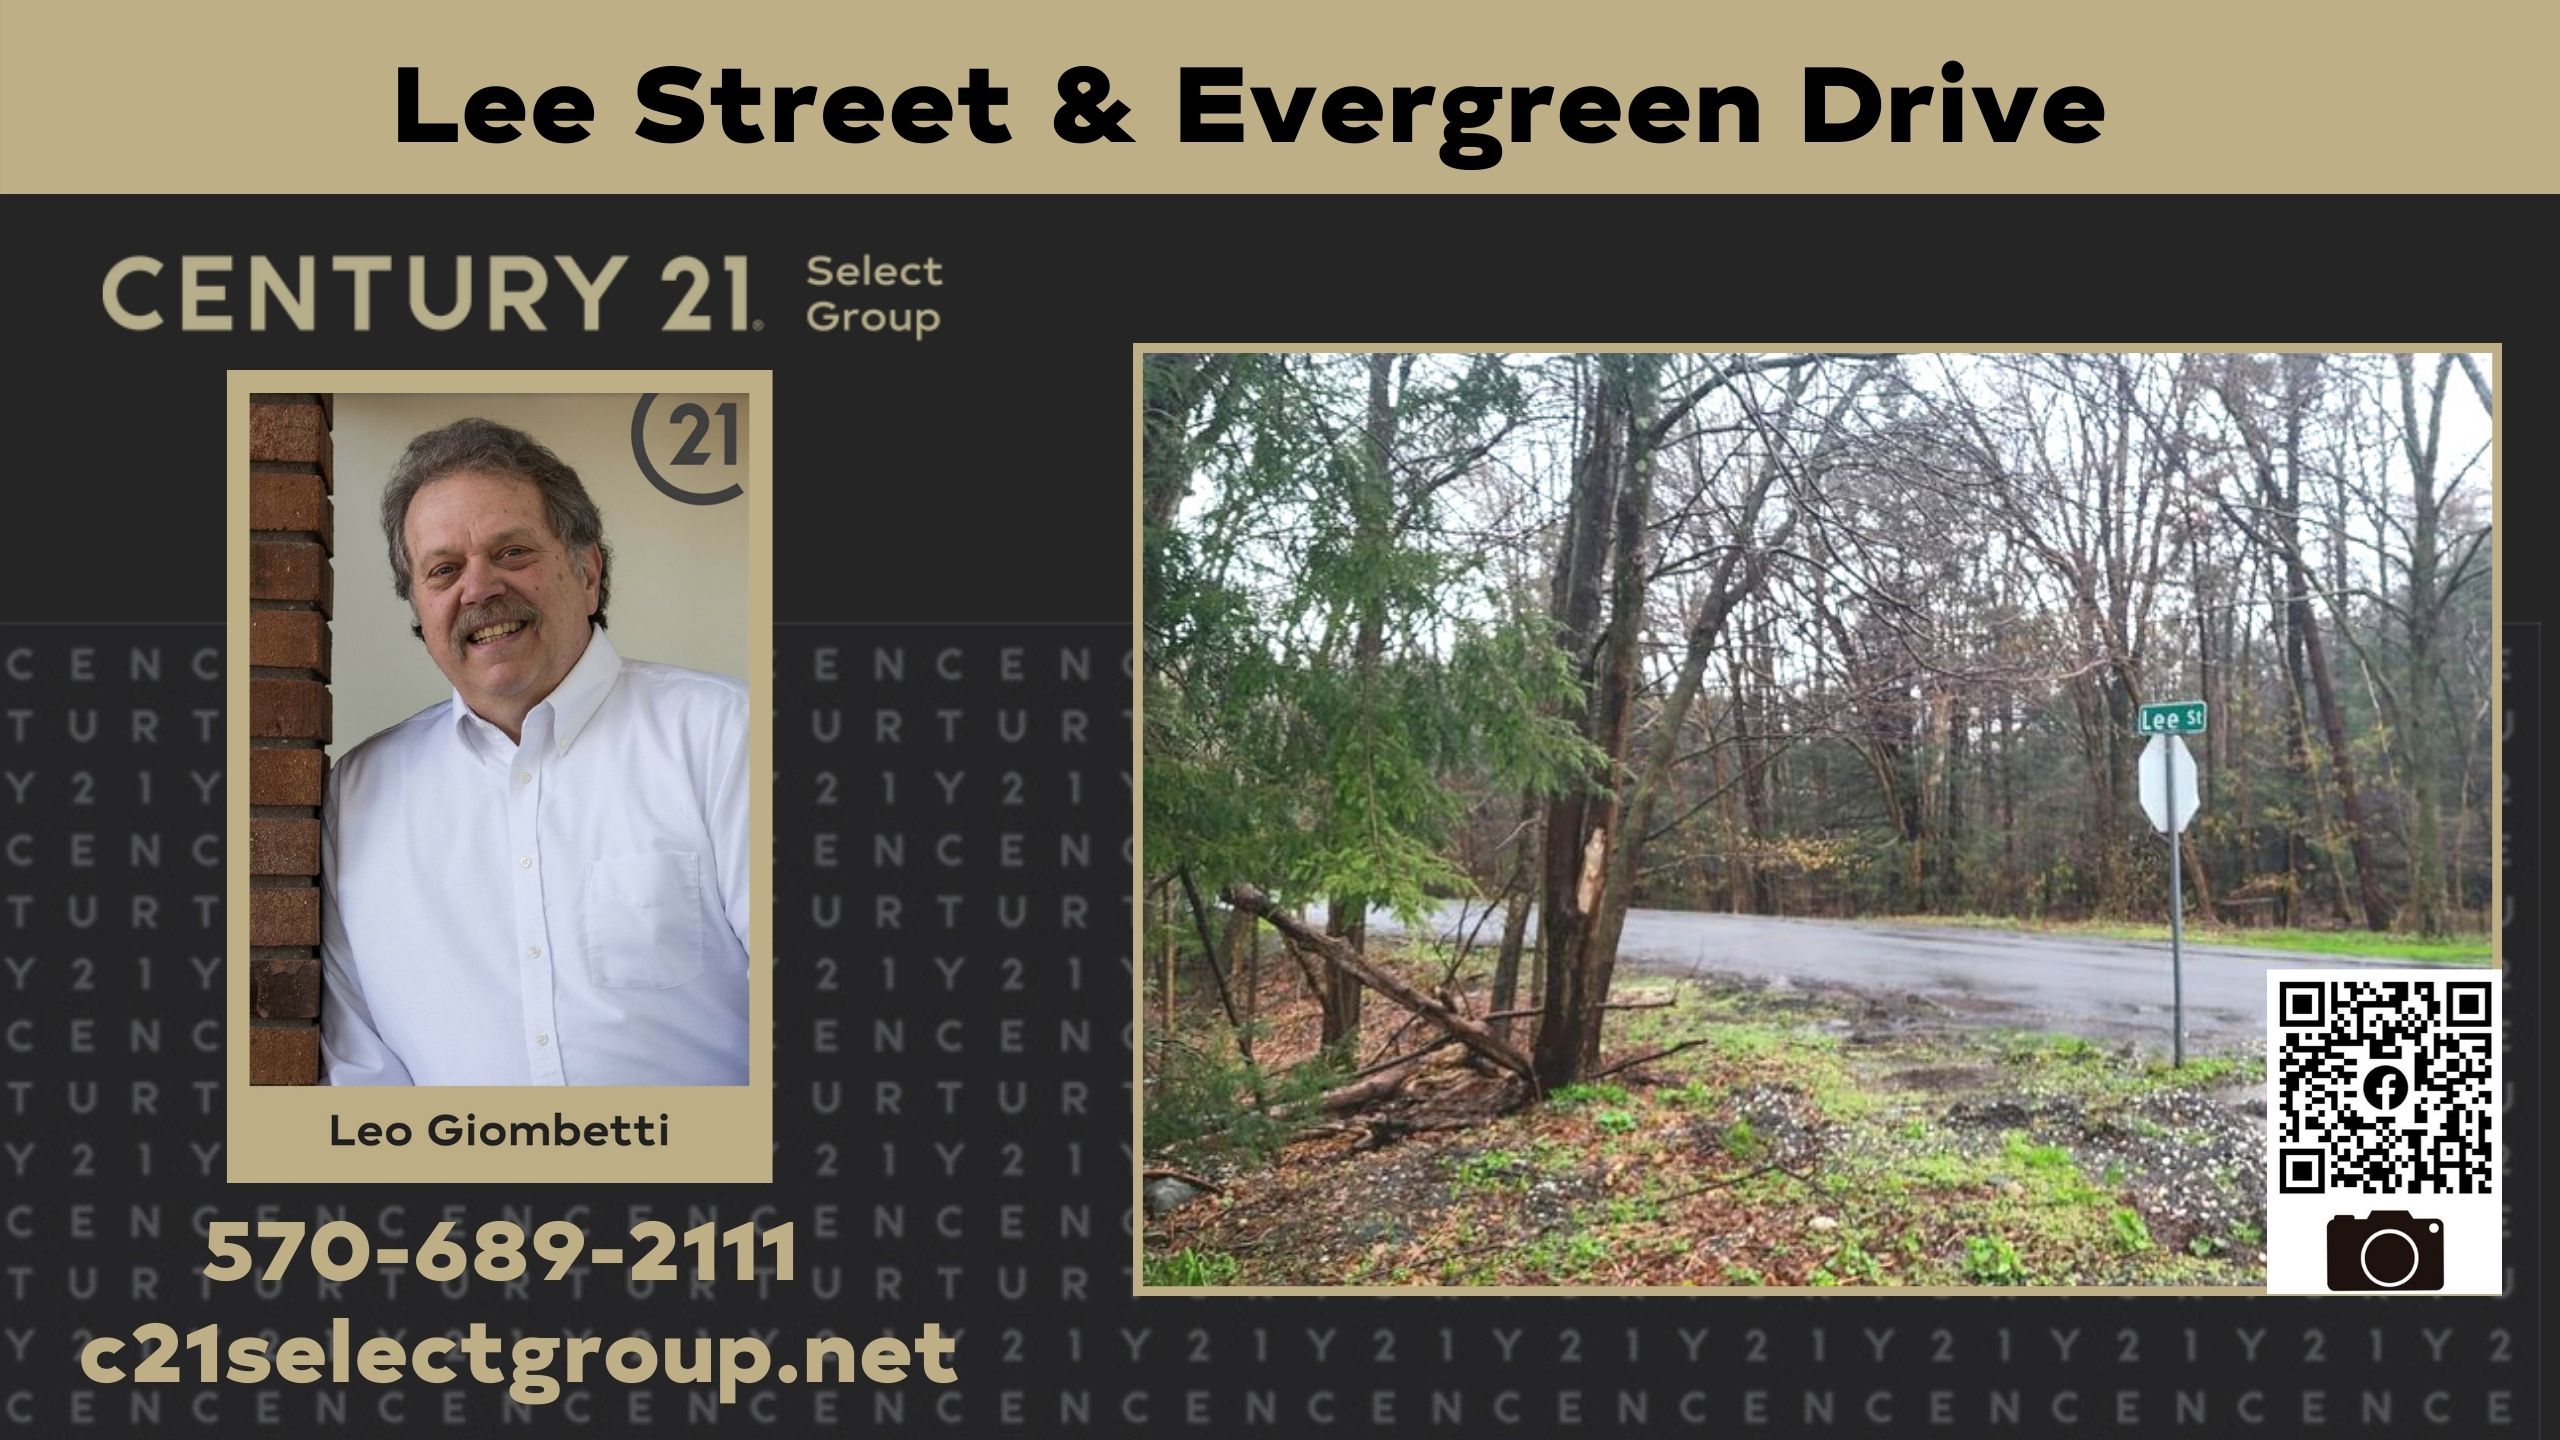 Lee Street & Evergreen Drive: Half Acre Parcel in Covington Twp